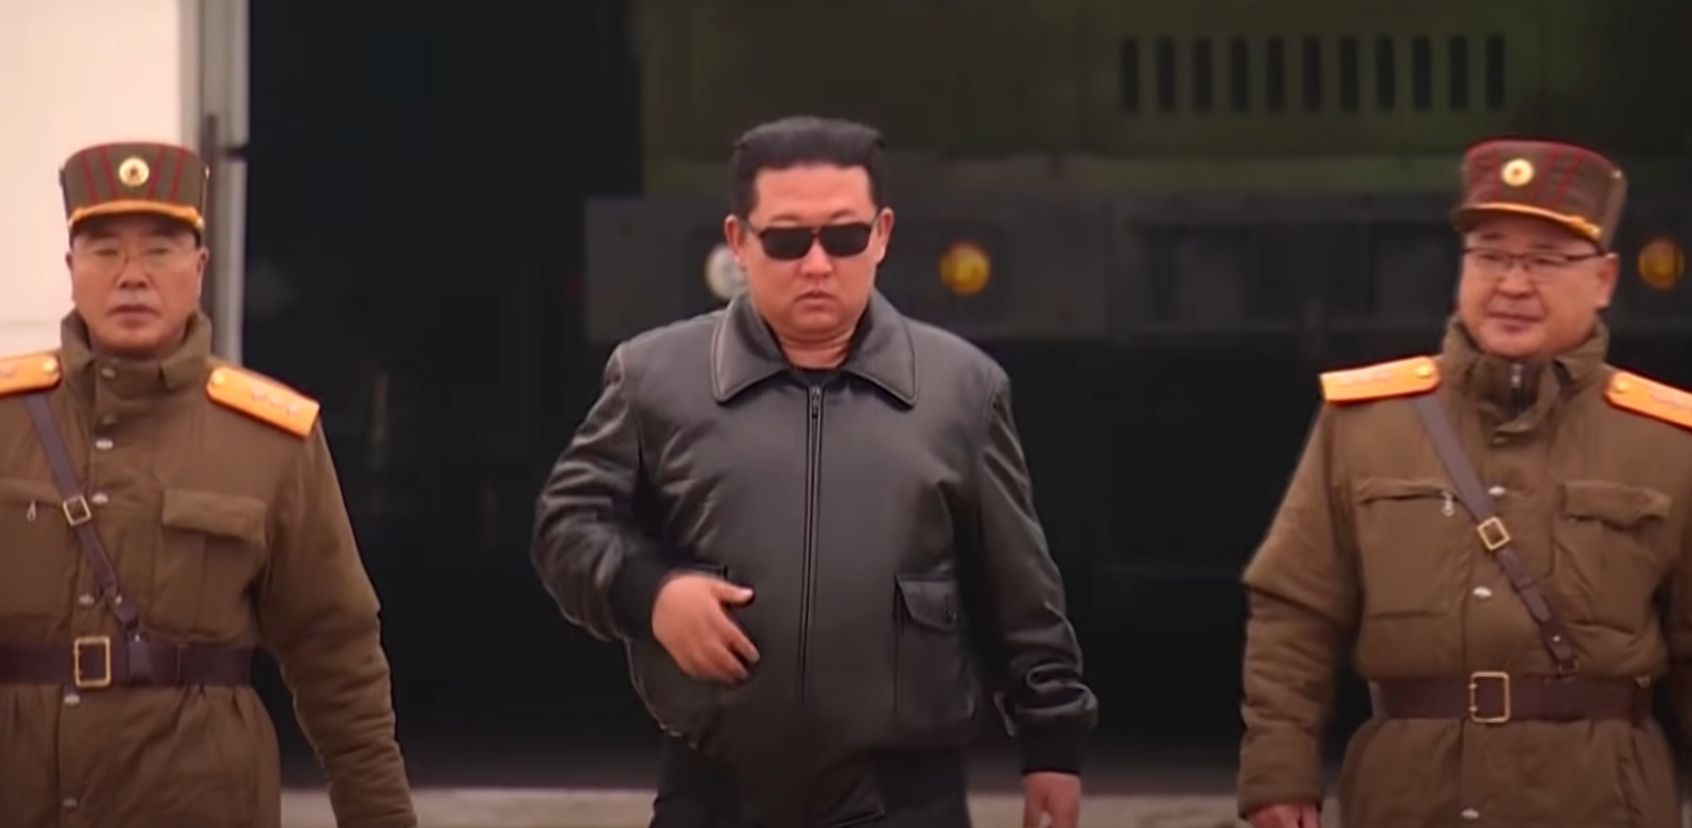 Tir Missile Balistique Video Ridicule Coree Nord Pyong Yang Kim Jong-Un Plare